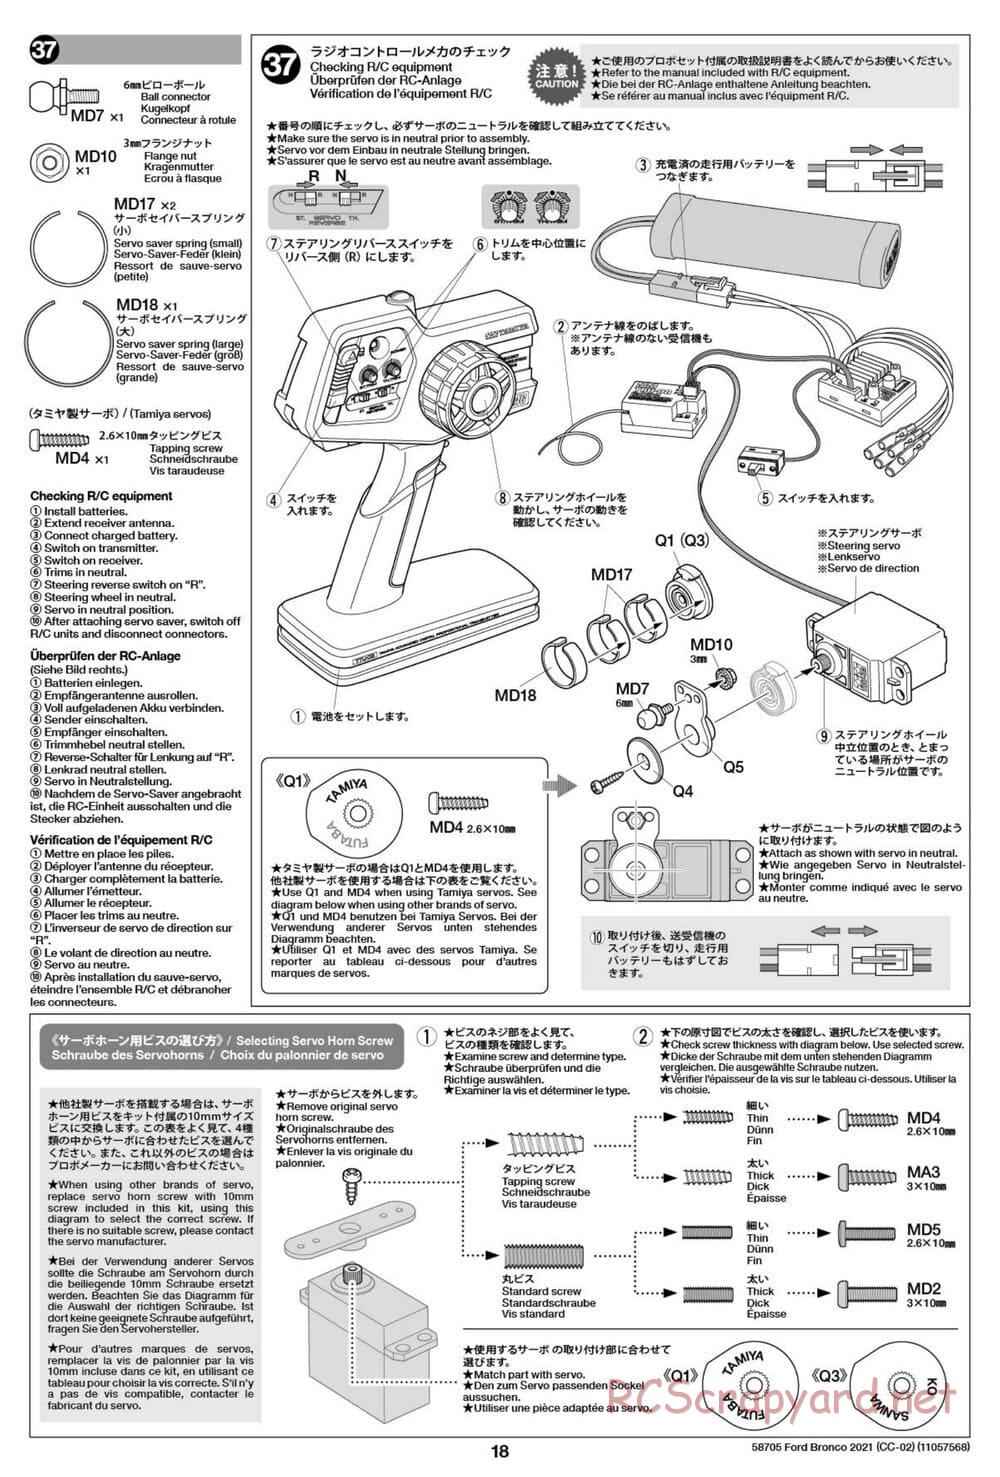 Tamiya - Ford Bronco 2021 - CC-02 Chassis - Manual - Page 18